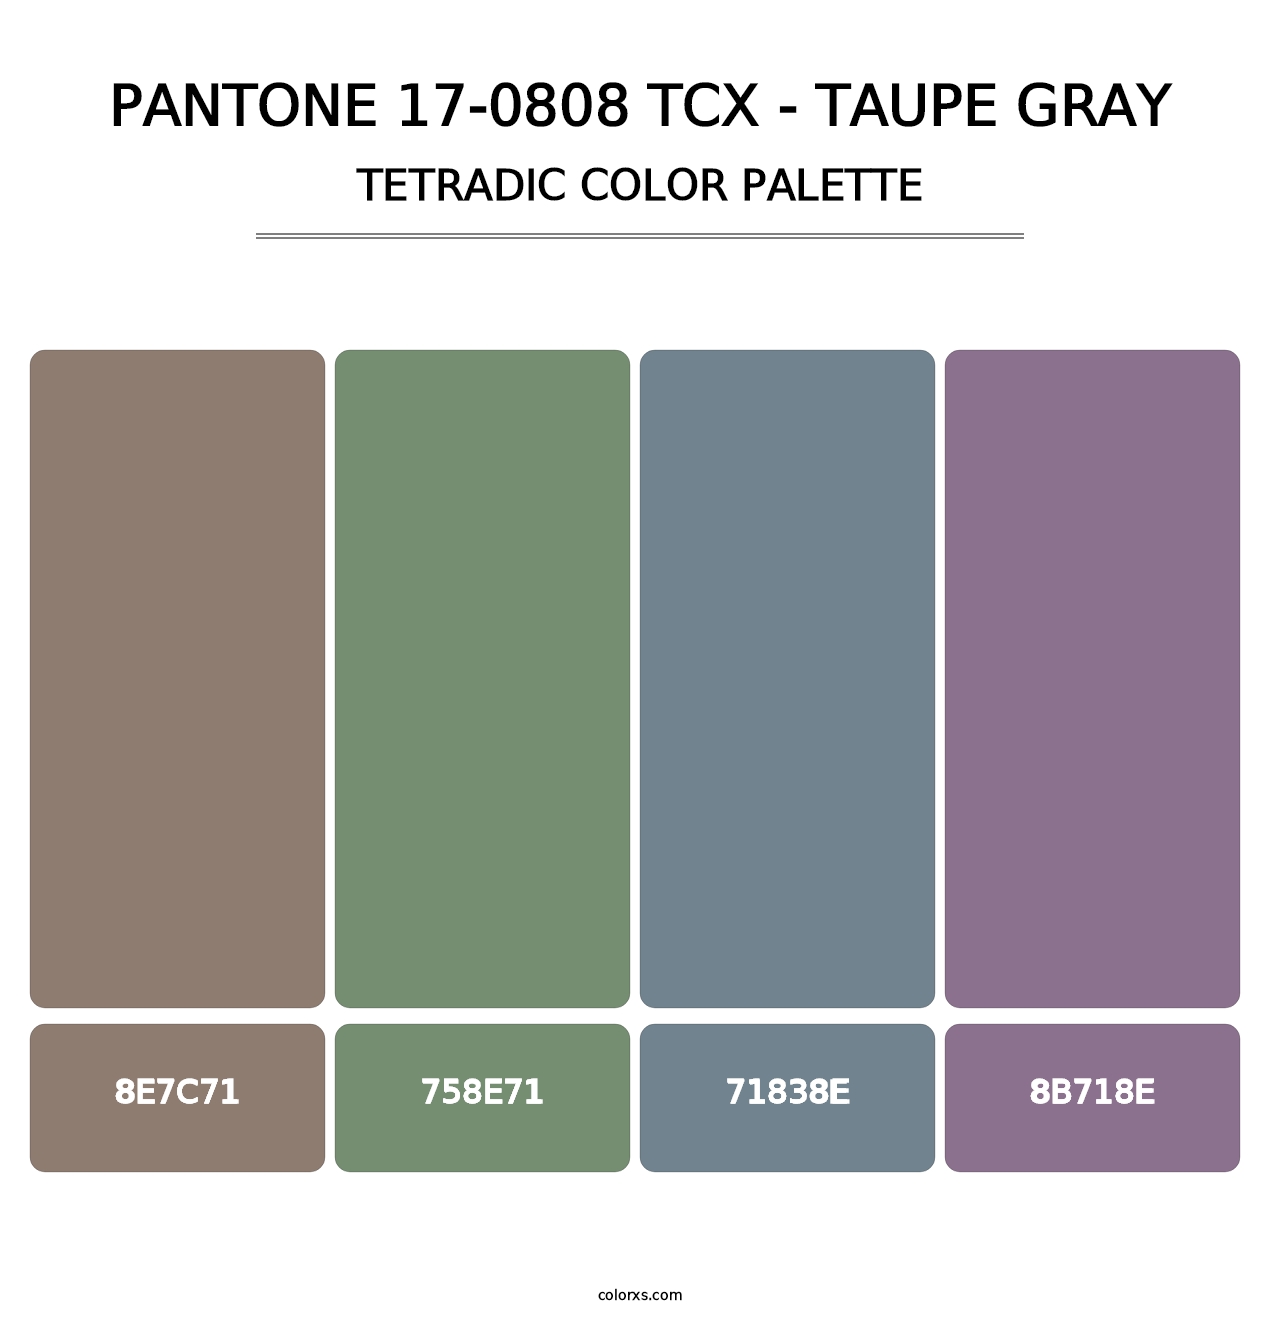 PANTONE 17-0808 TCX - Taupe Gray - Tetradic Color Palette